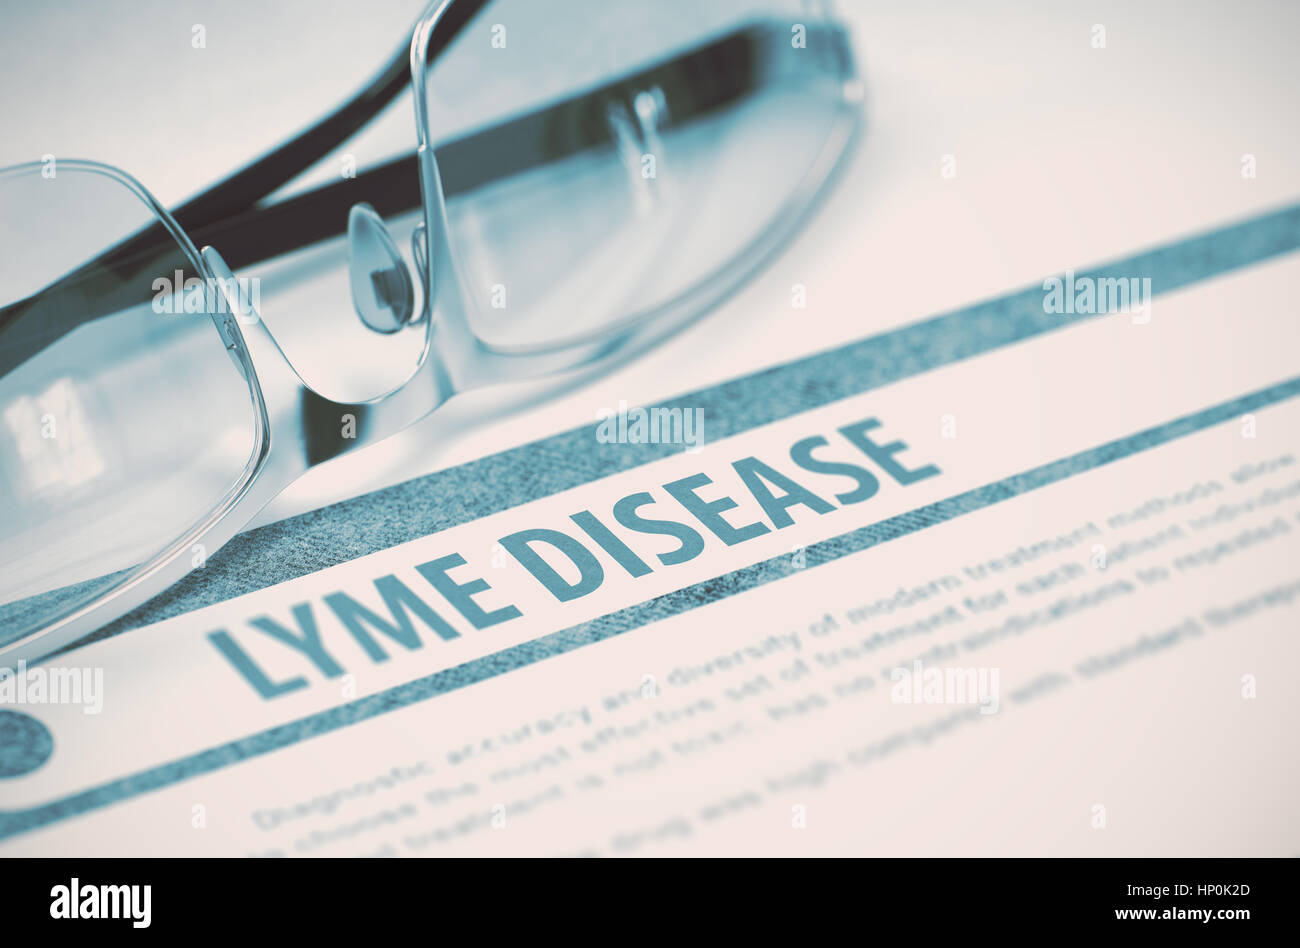 Diagnosis - Lyme Disease. Medicine Concept. 3D Illustration. Stock Photo